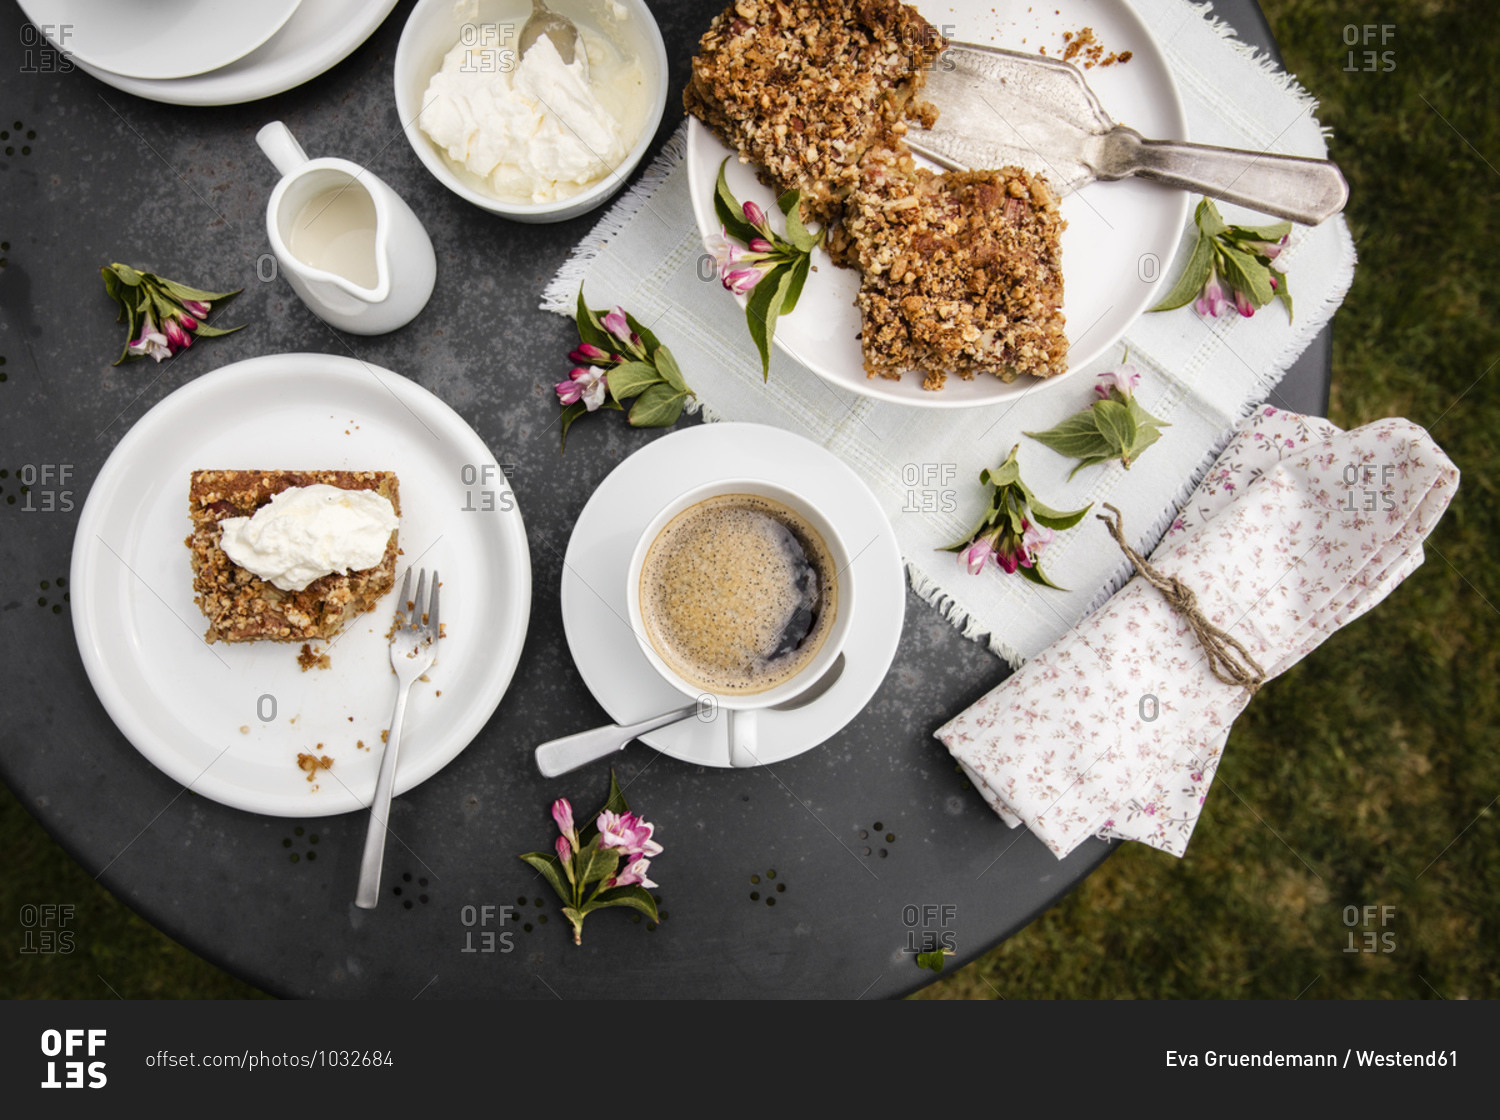 Cup of coffee and homemade rhubarb cake on garden coffee table